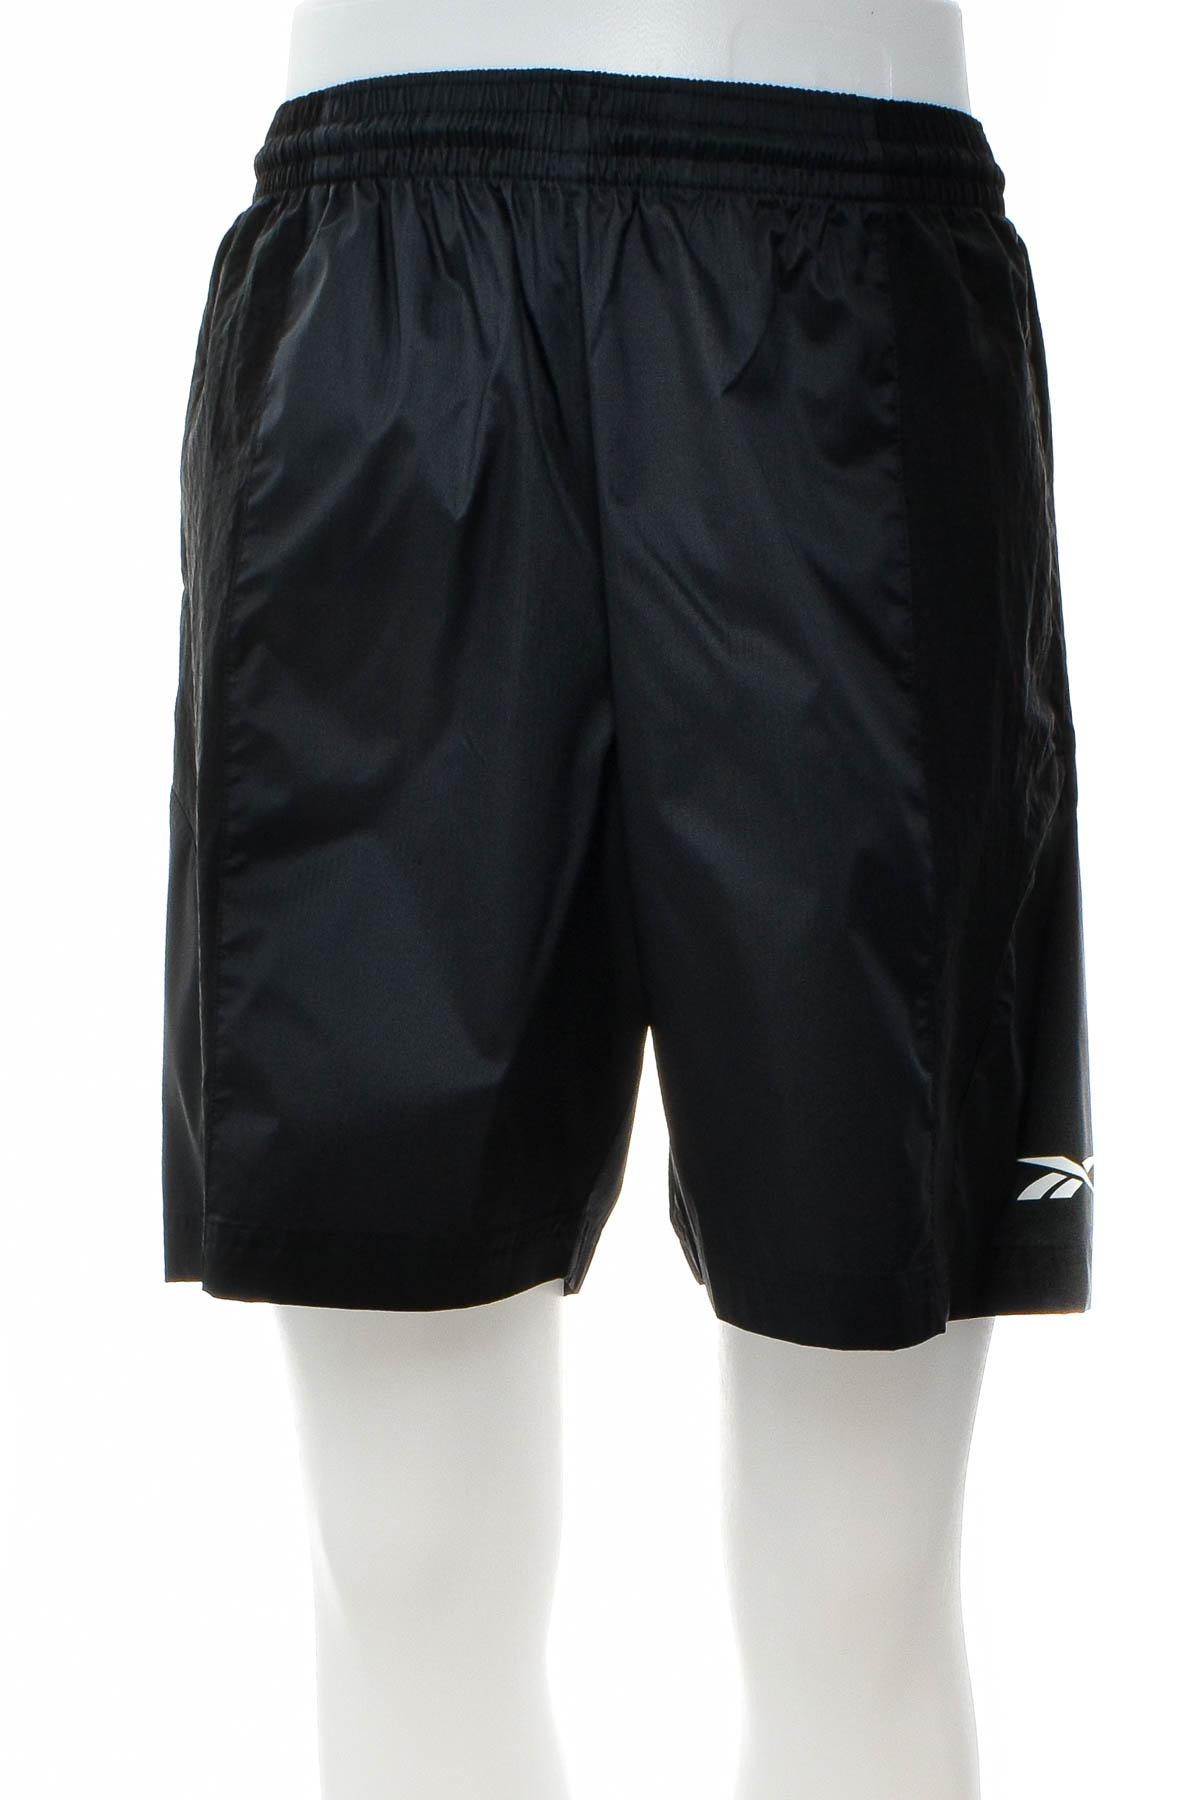 Men's shorts - Reebok - 0